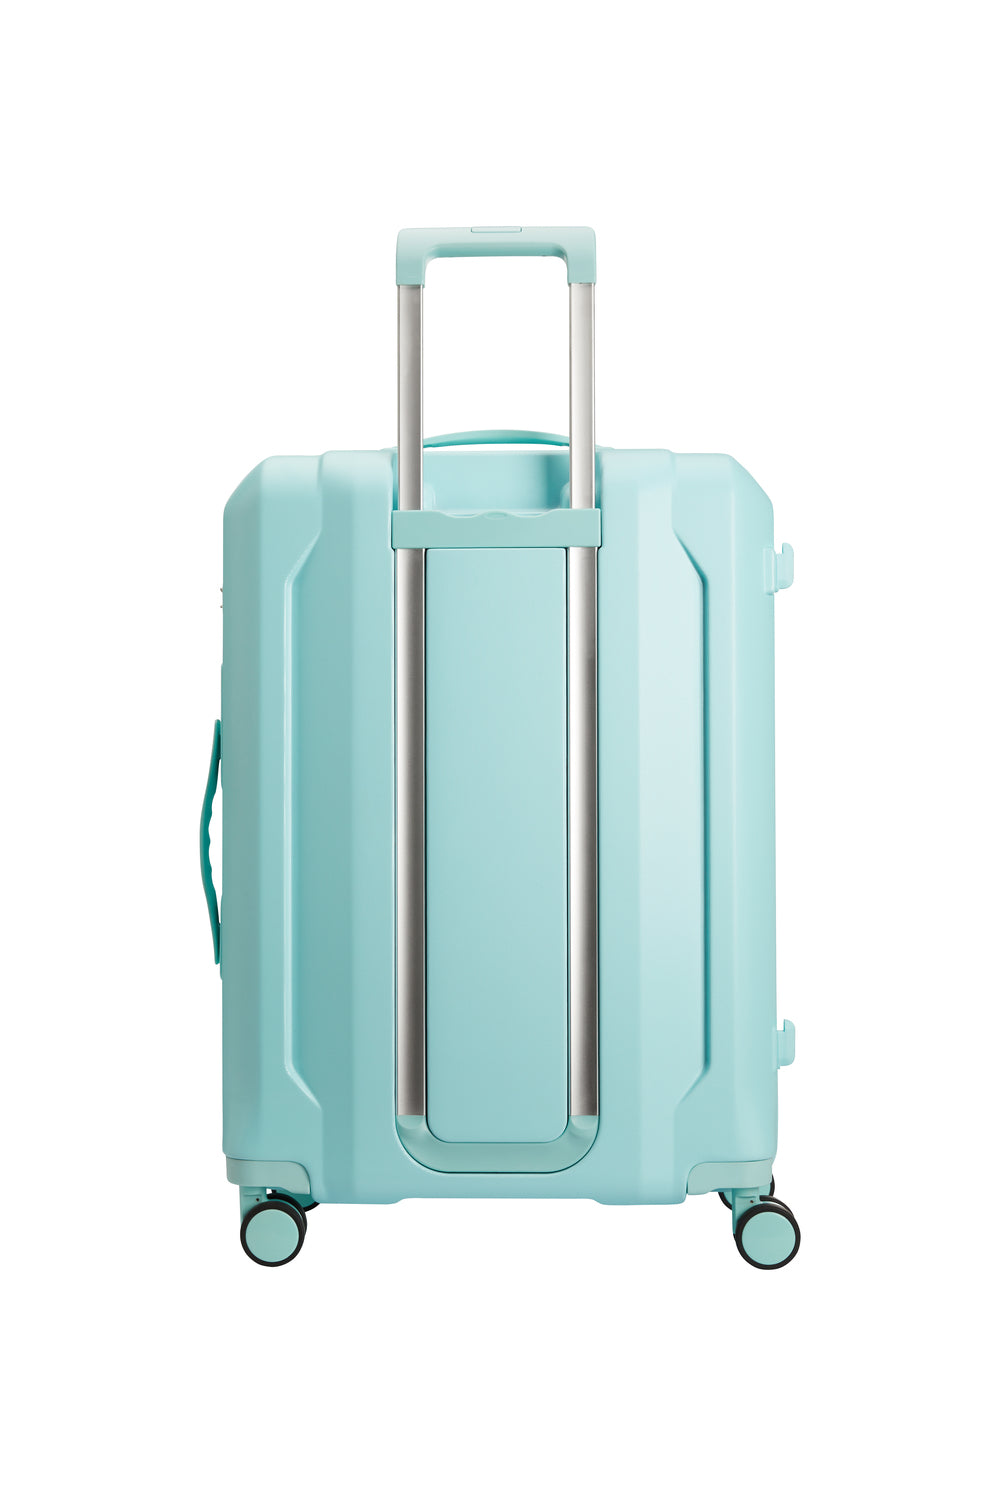 Smart suitcase Large size Wonder Ocean HAVE A REST